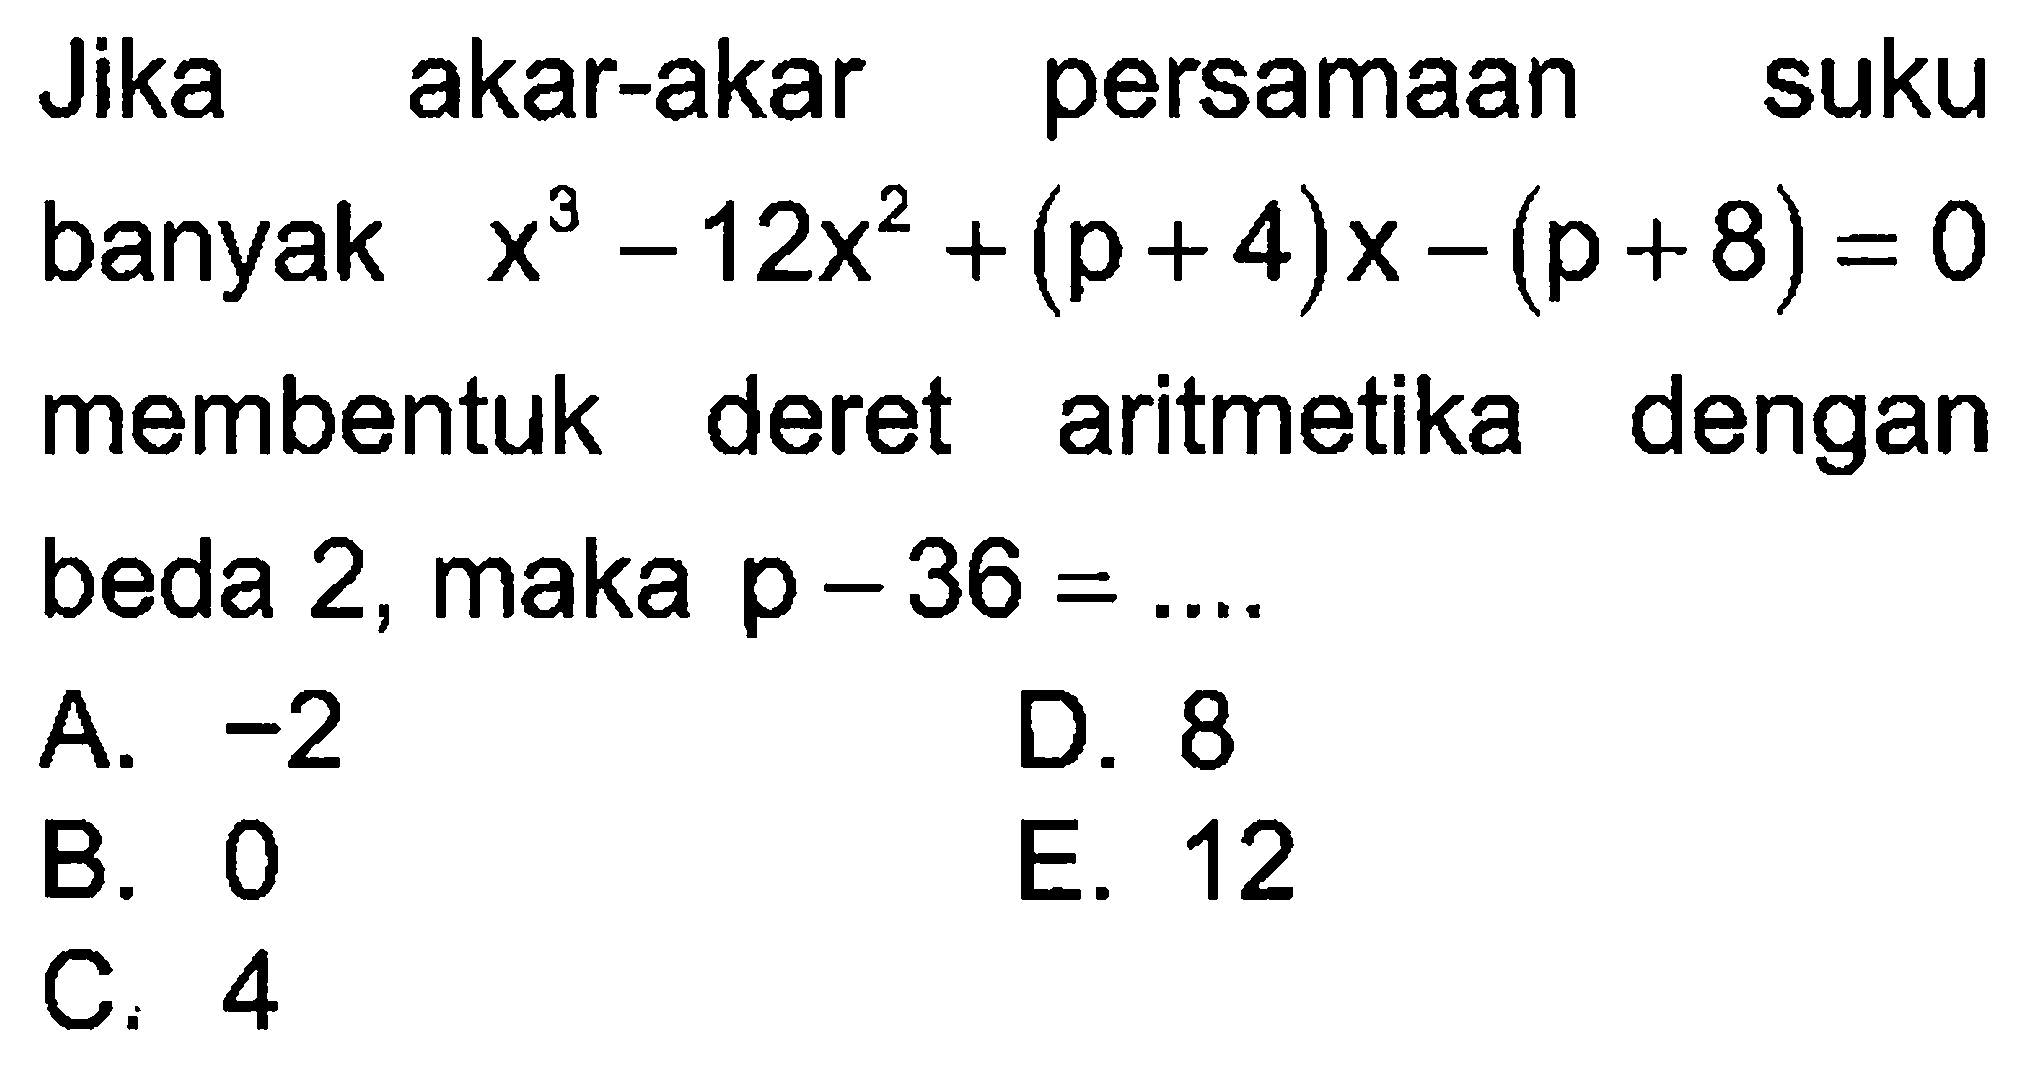 Jika akar-akar persamaan suku banyak x^3-12x^2+(p+4)x-(p+8)=0 membentuk deret aritmetika dengan beda 2, maka p-36 = ....